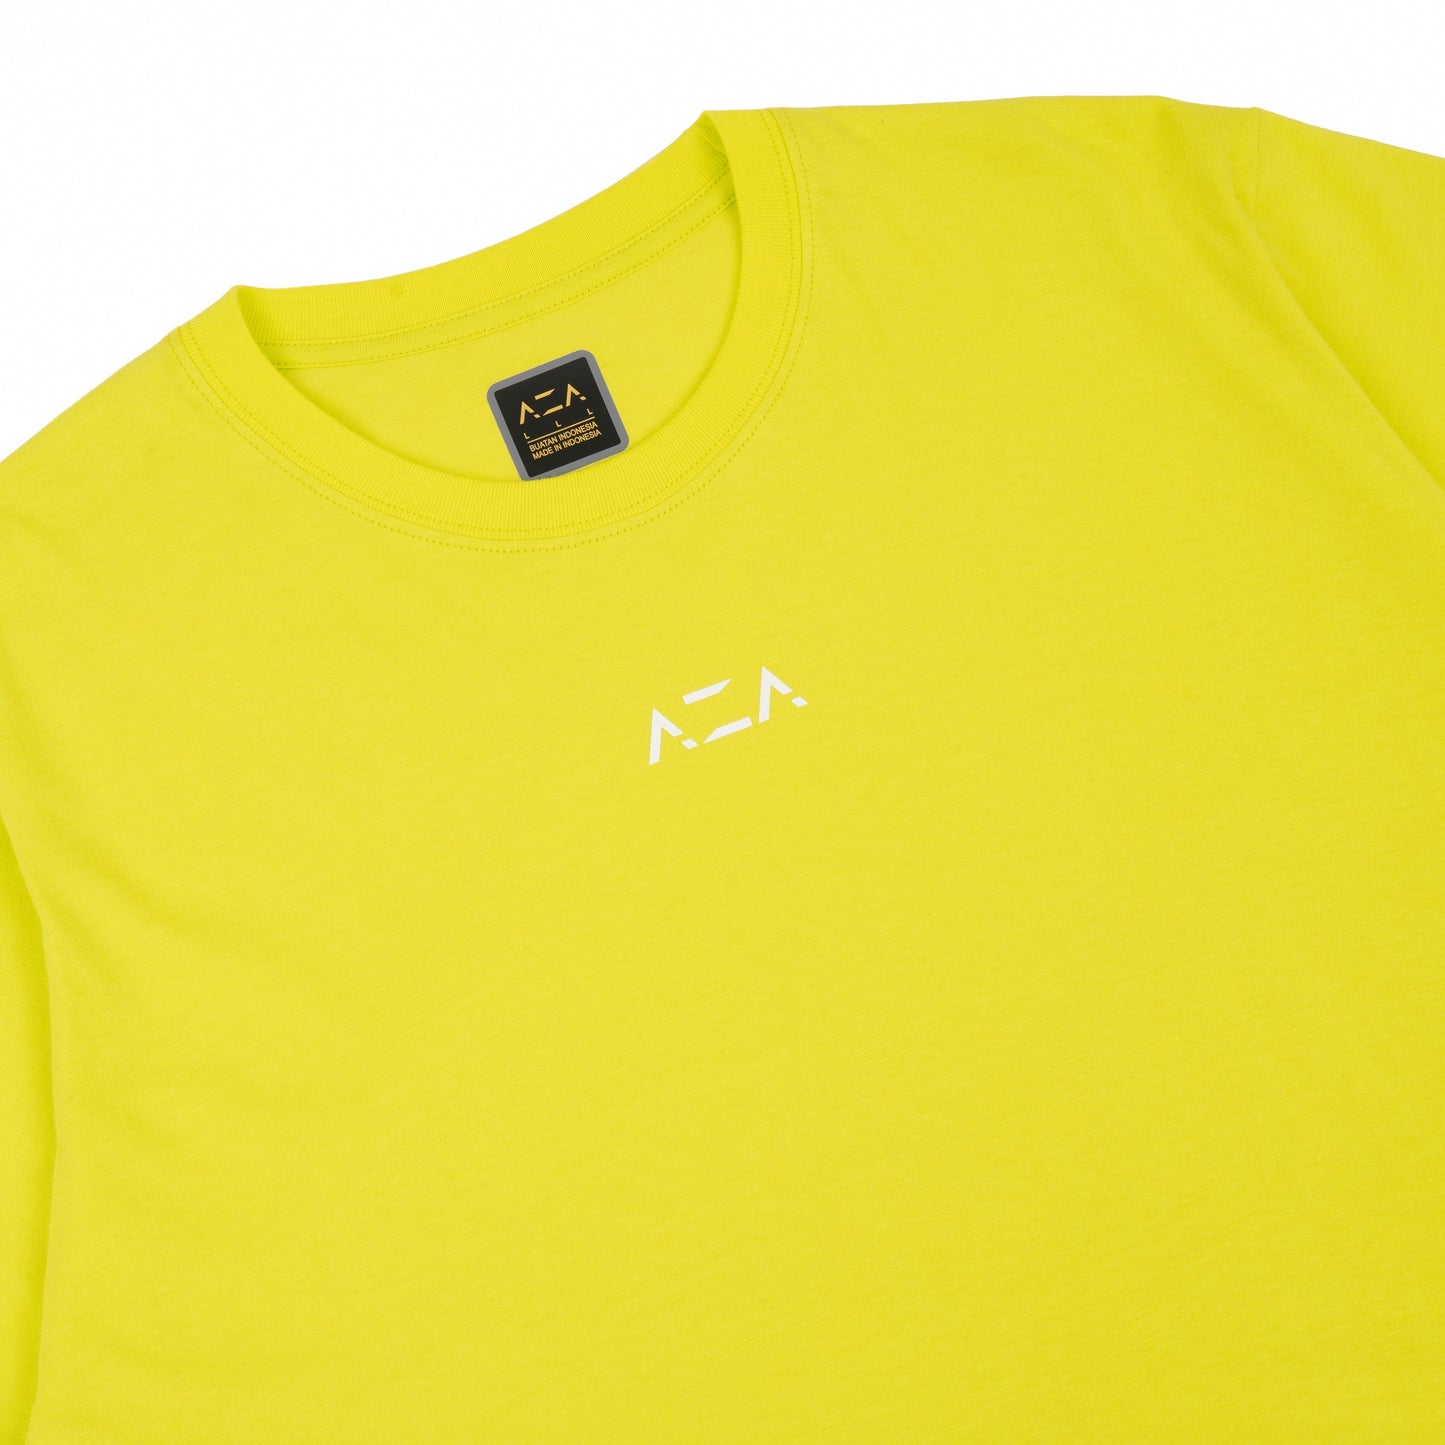 AZA T-Shirt Pro Basic Edition - Electric Lime